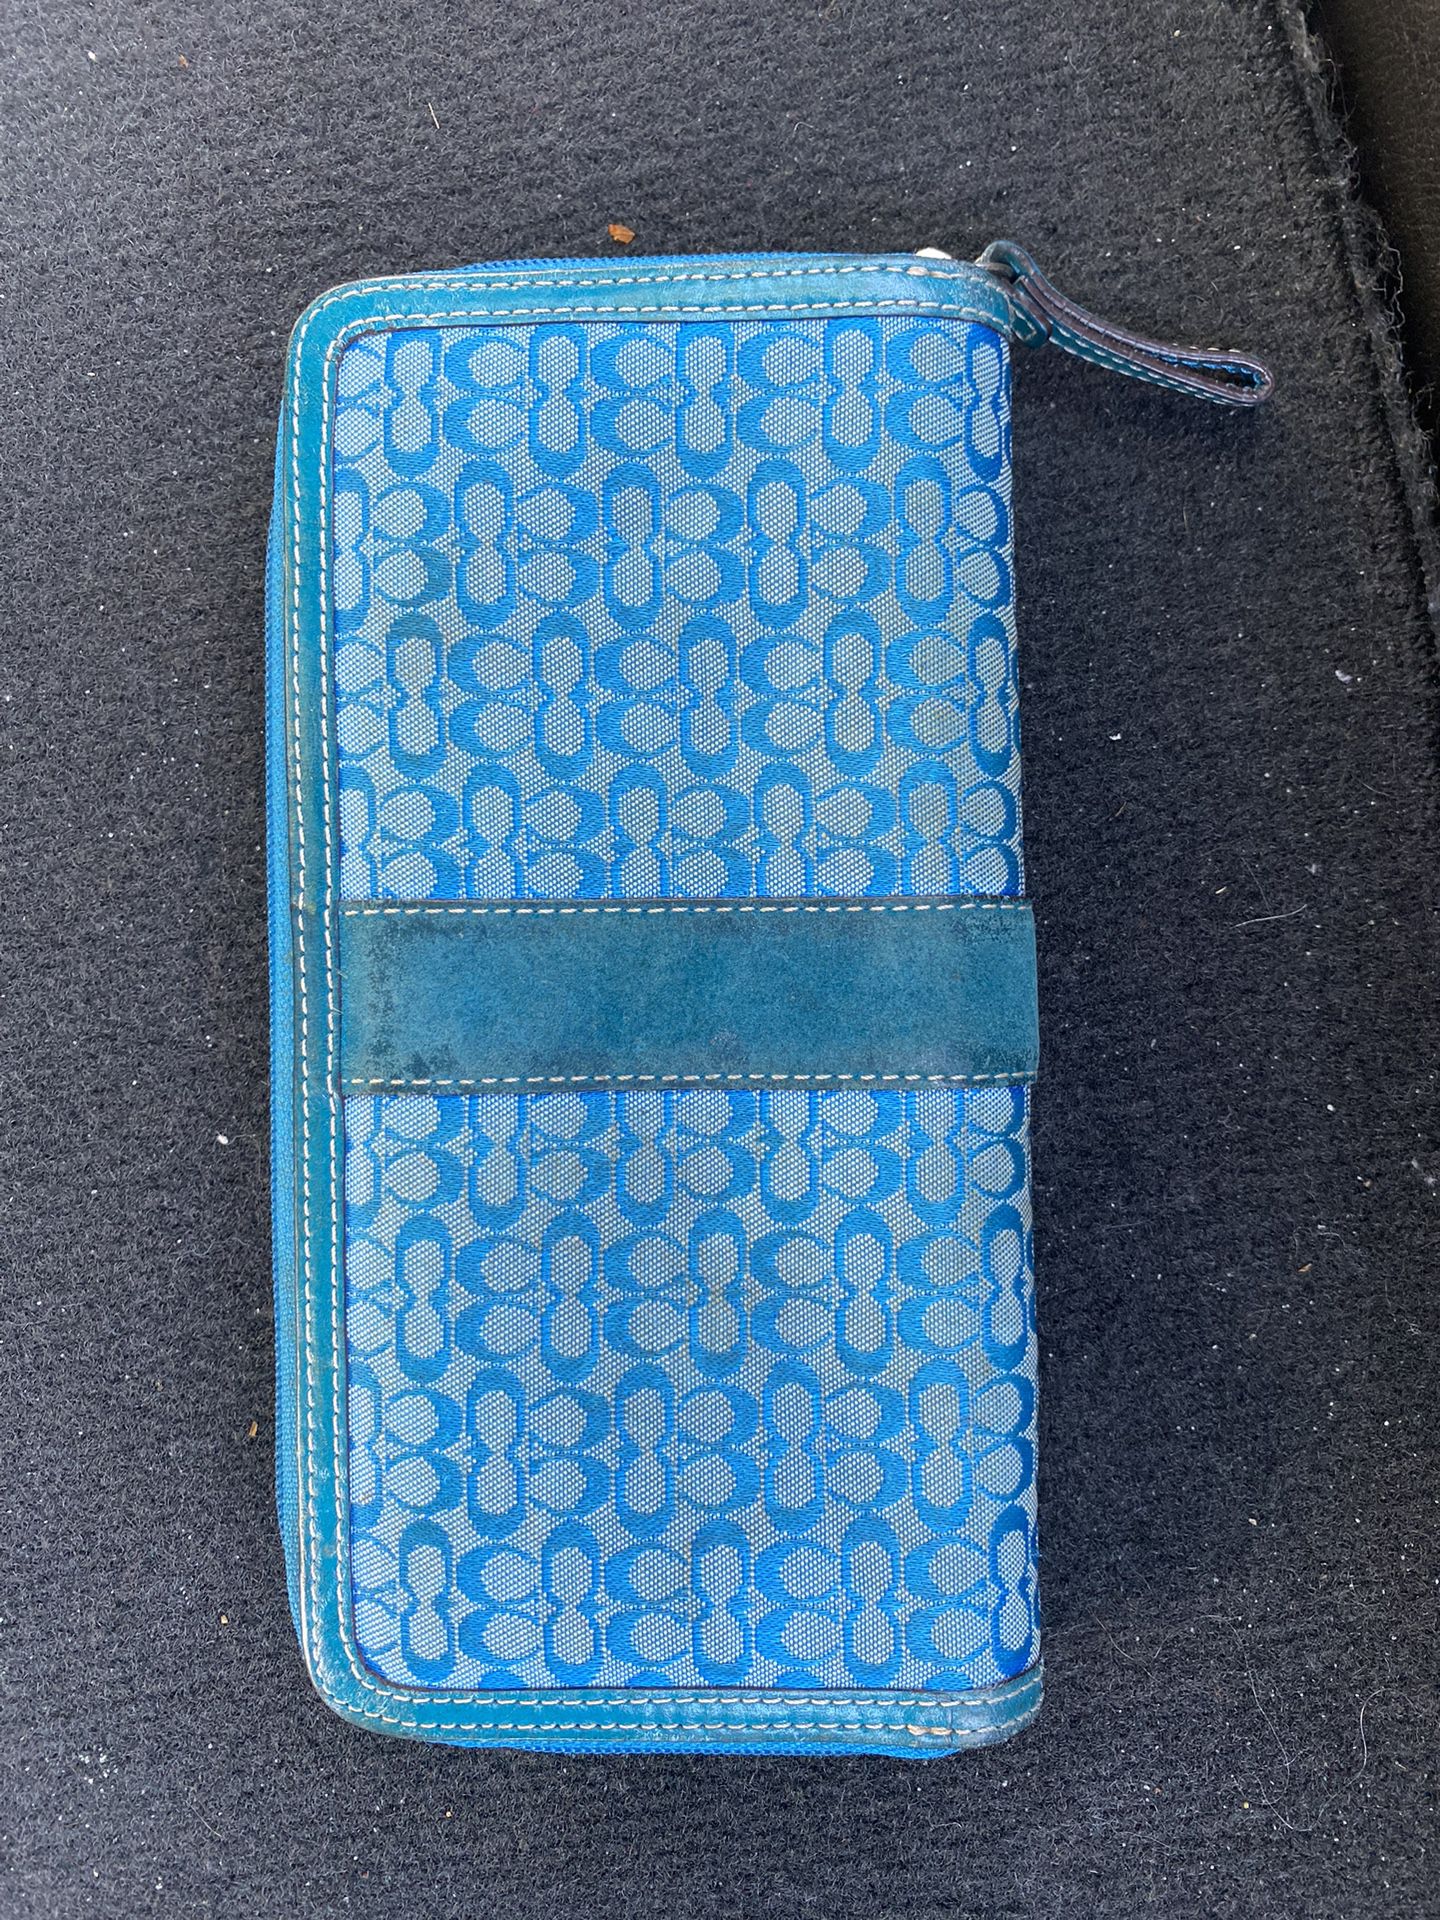 Blue Coach wallet 